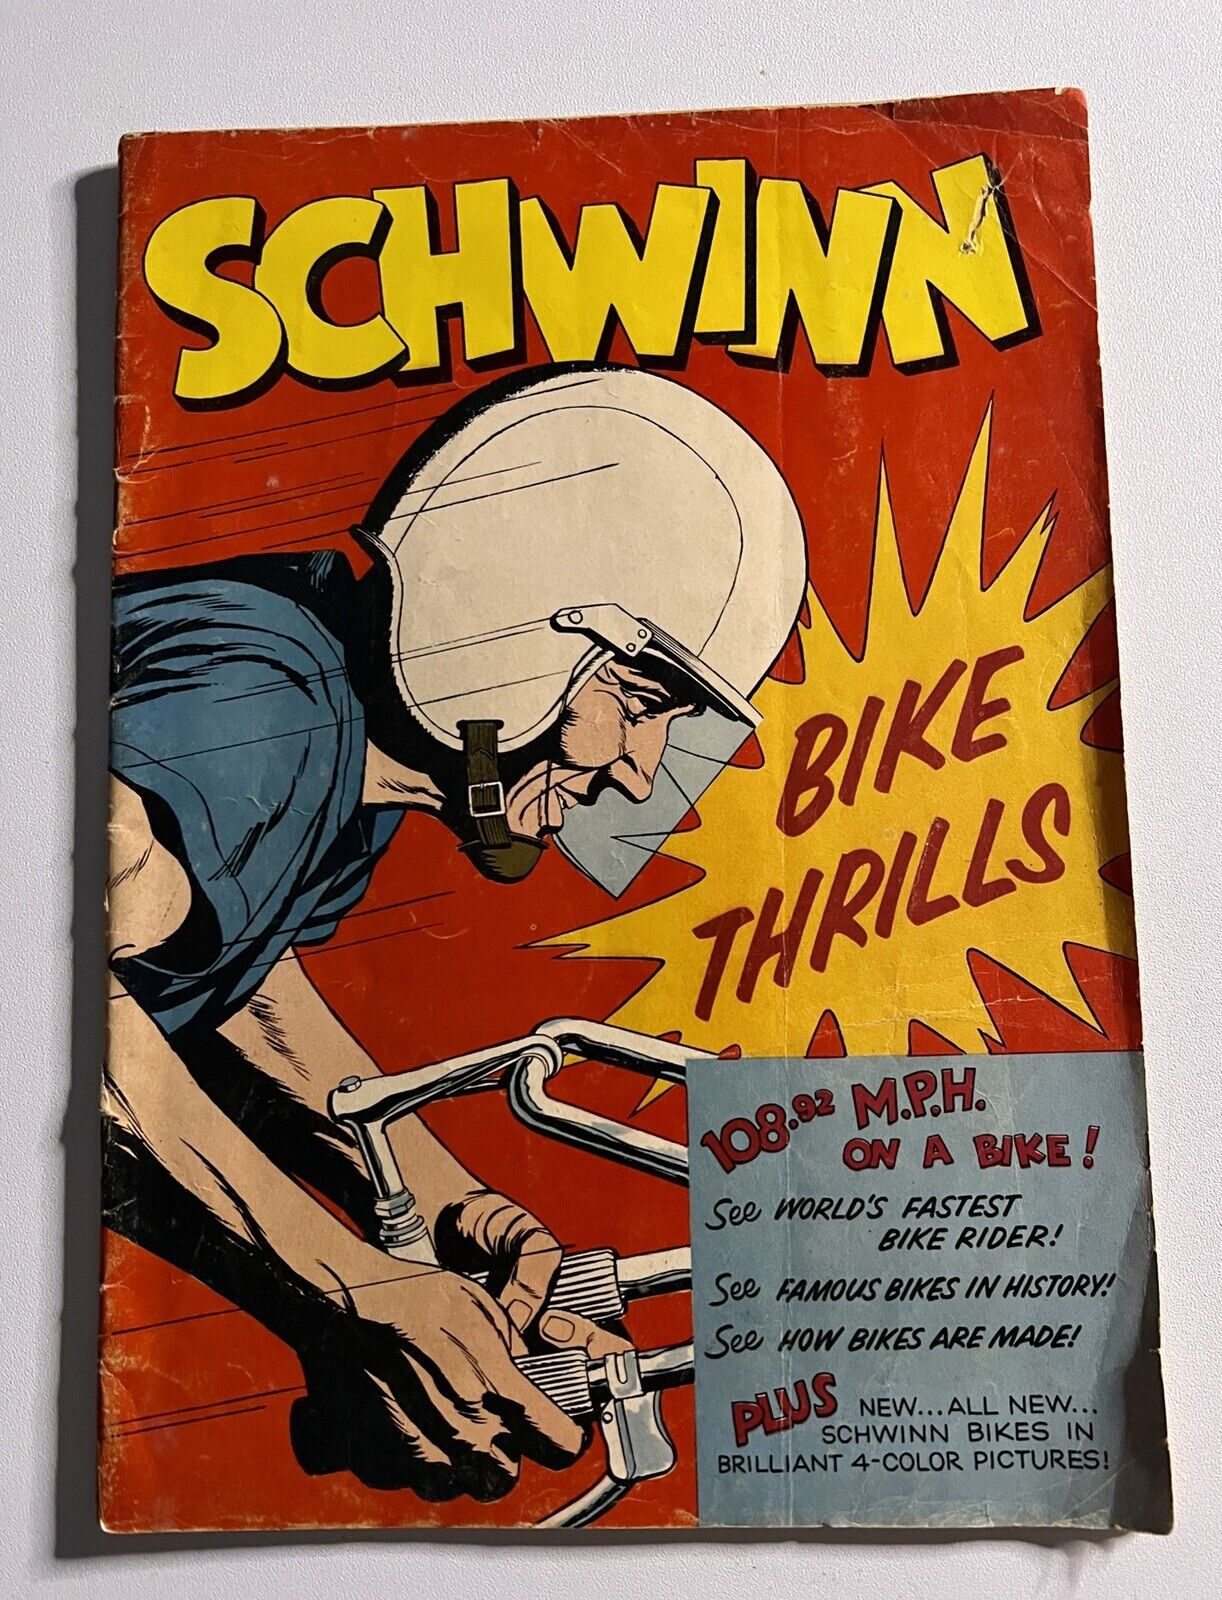 Schwinn Bike Thrills 1958 BICYCLE COMIC book promotional advertising original